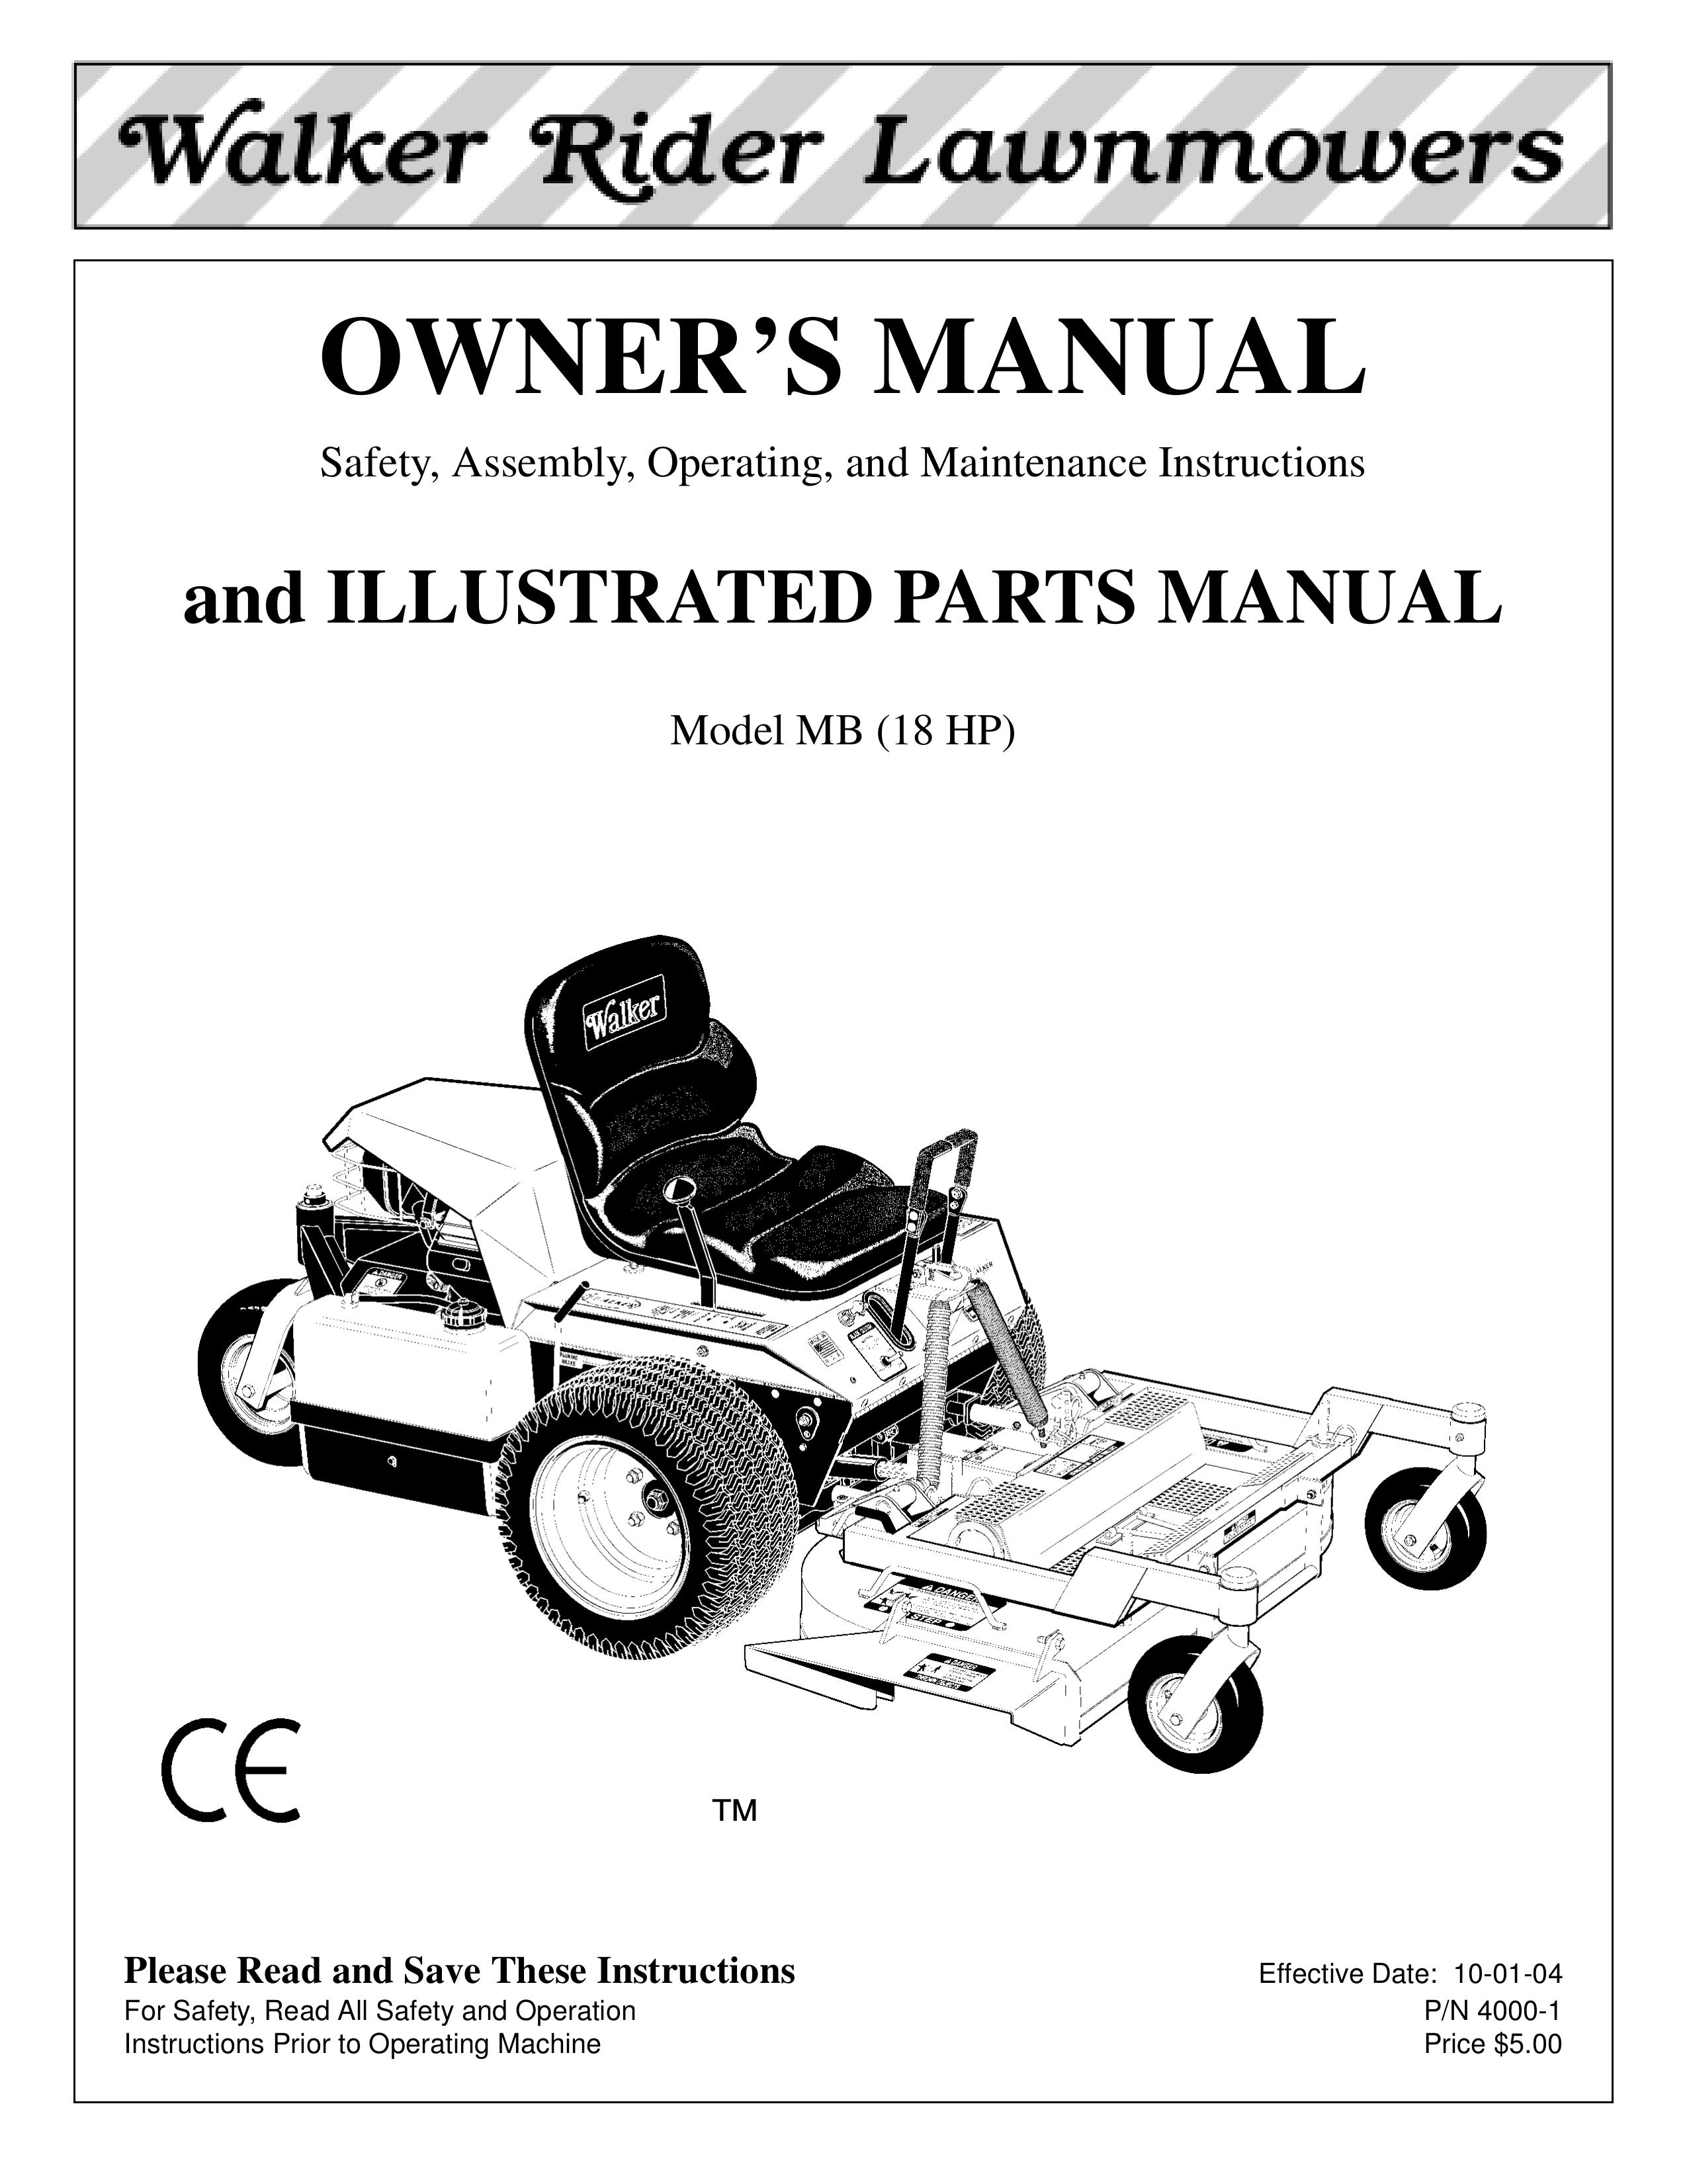 Walker MB (18 HP) Lawn Mower User Manual